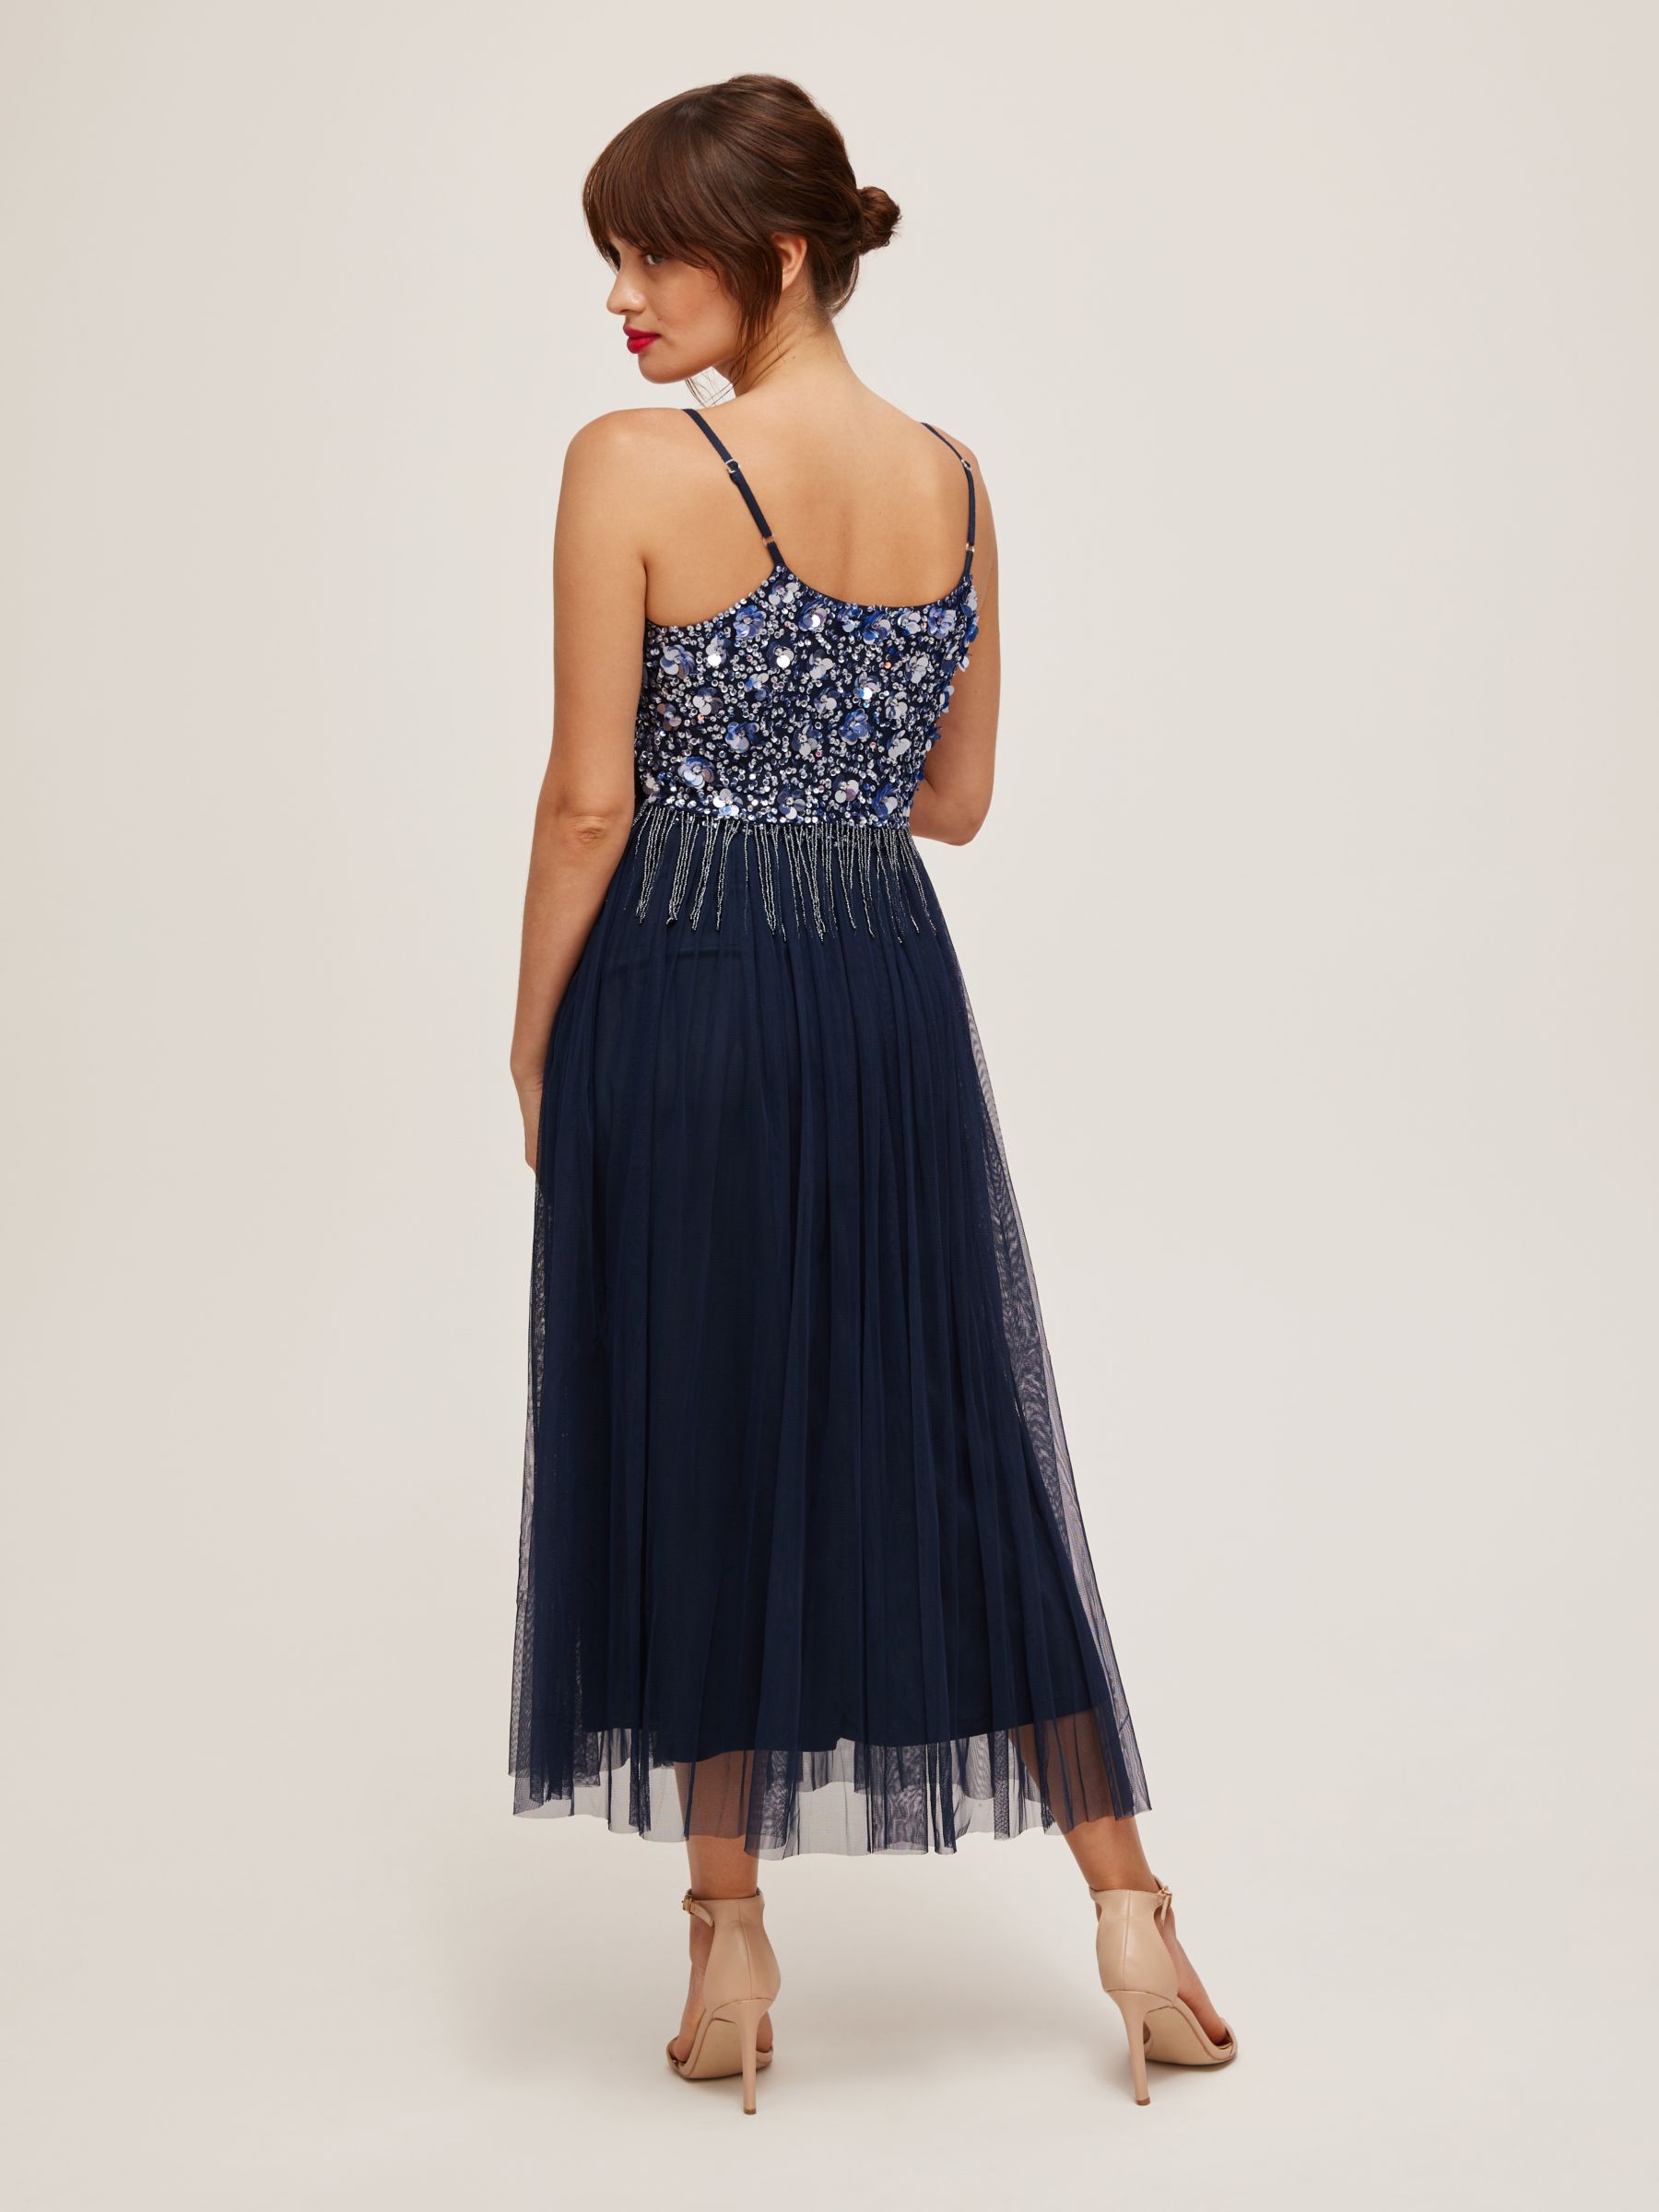 Lace & Beads Riri Embellished Midi Dress, Navy, 8